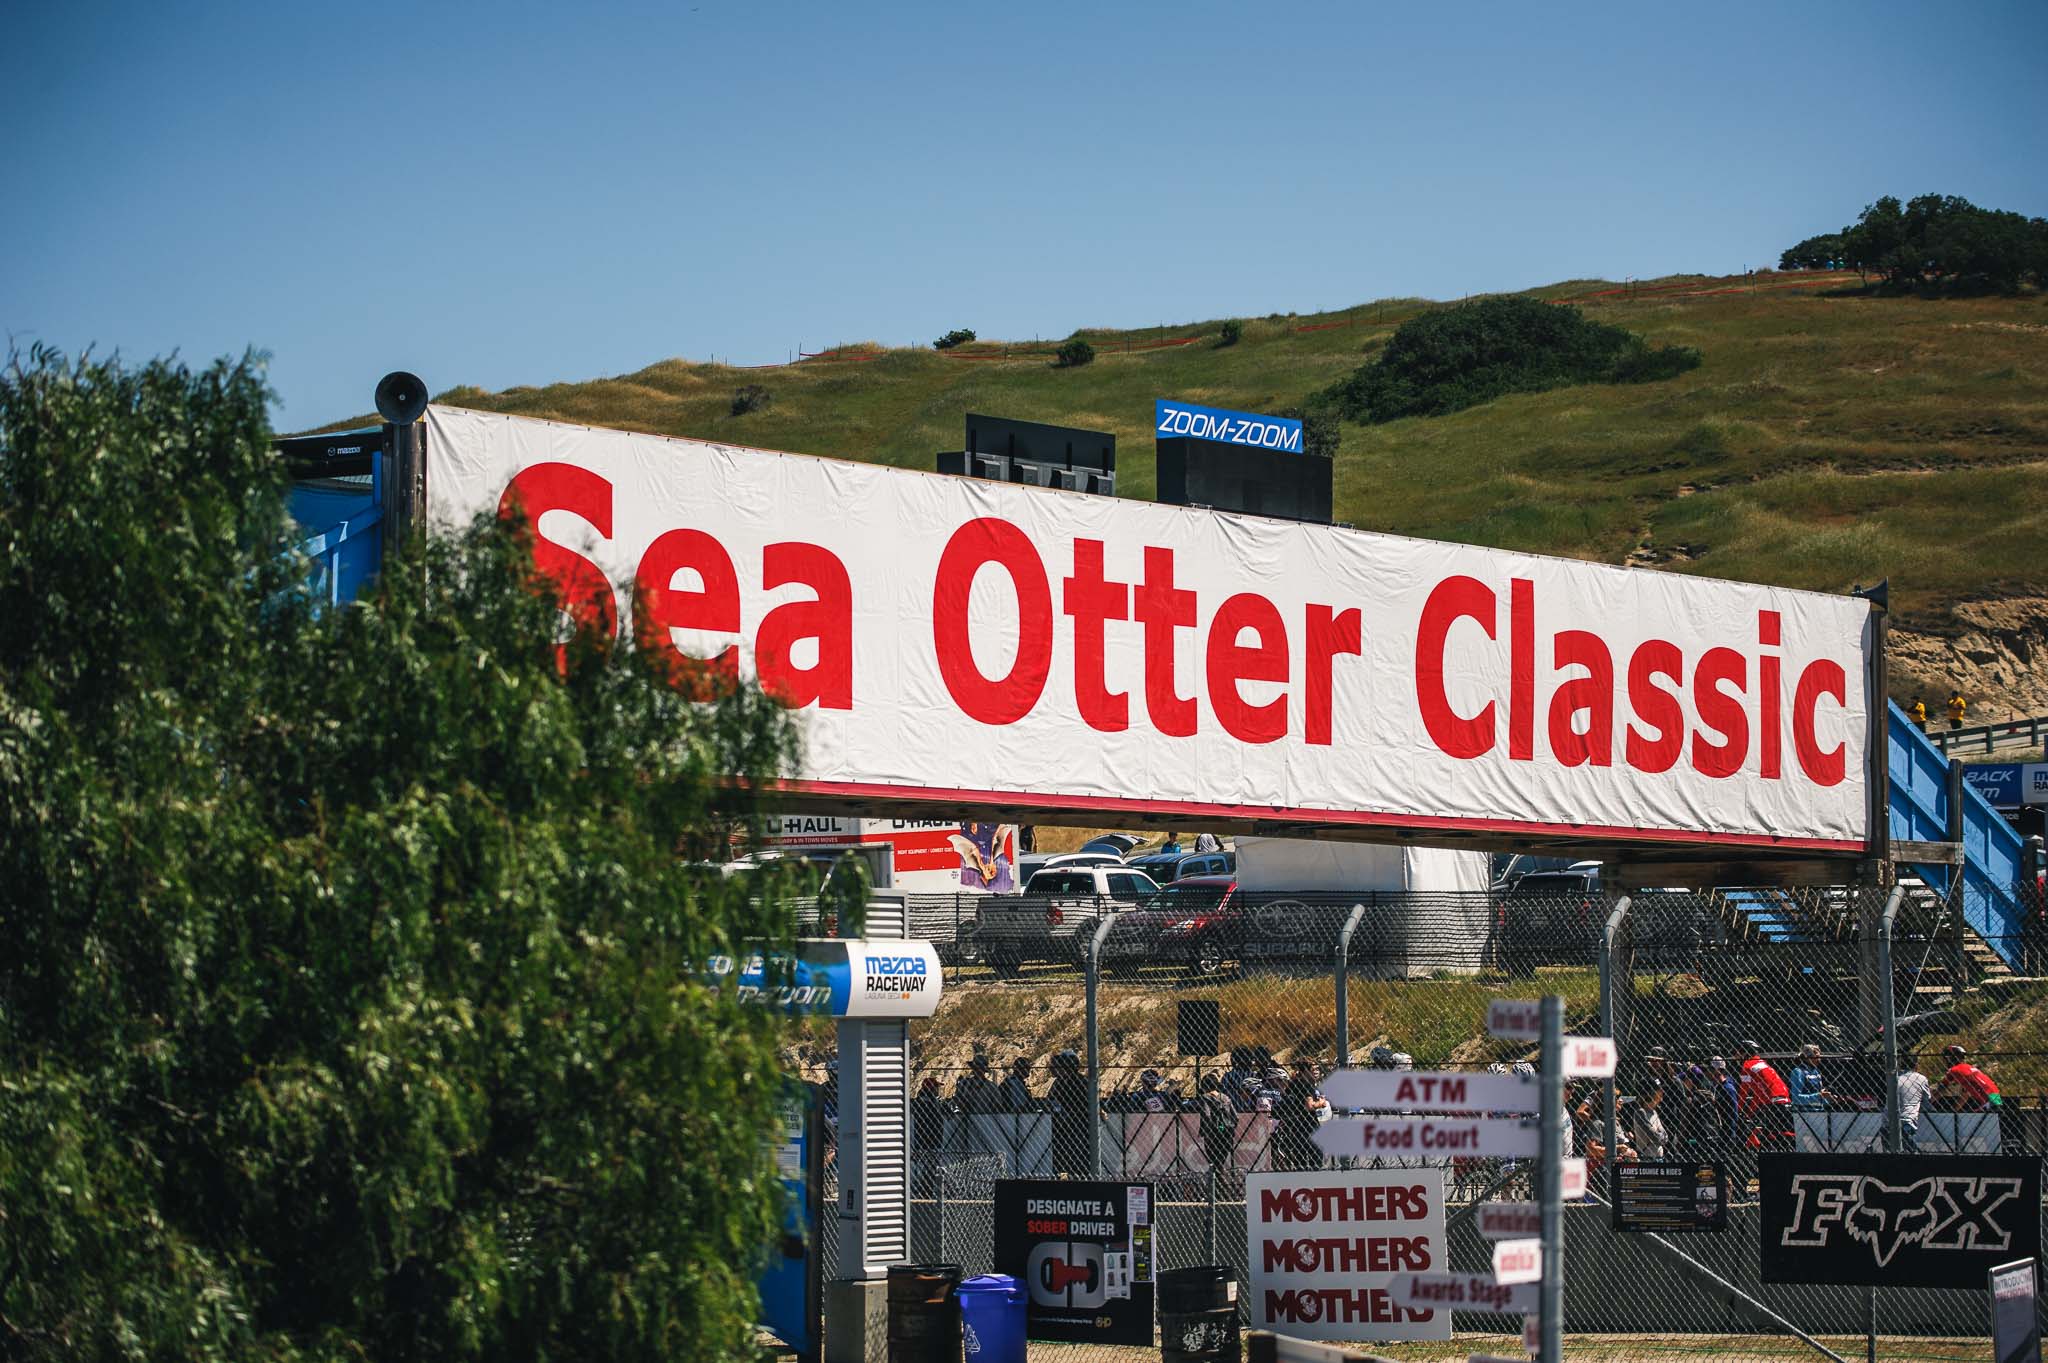 La Sea Otter Classic débarque en Europe !